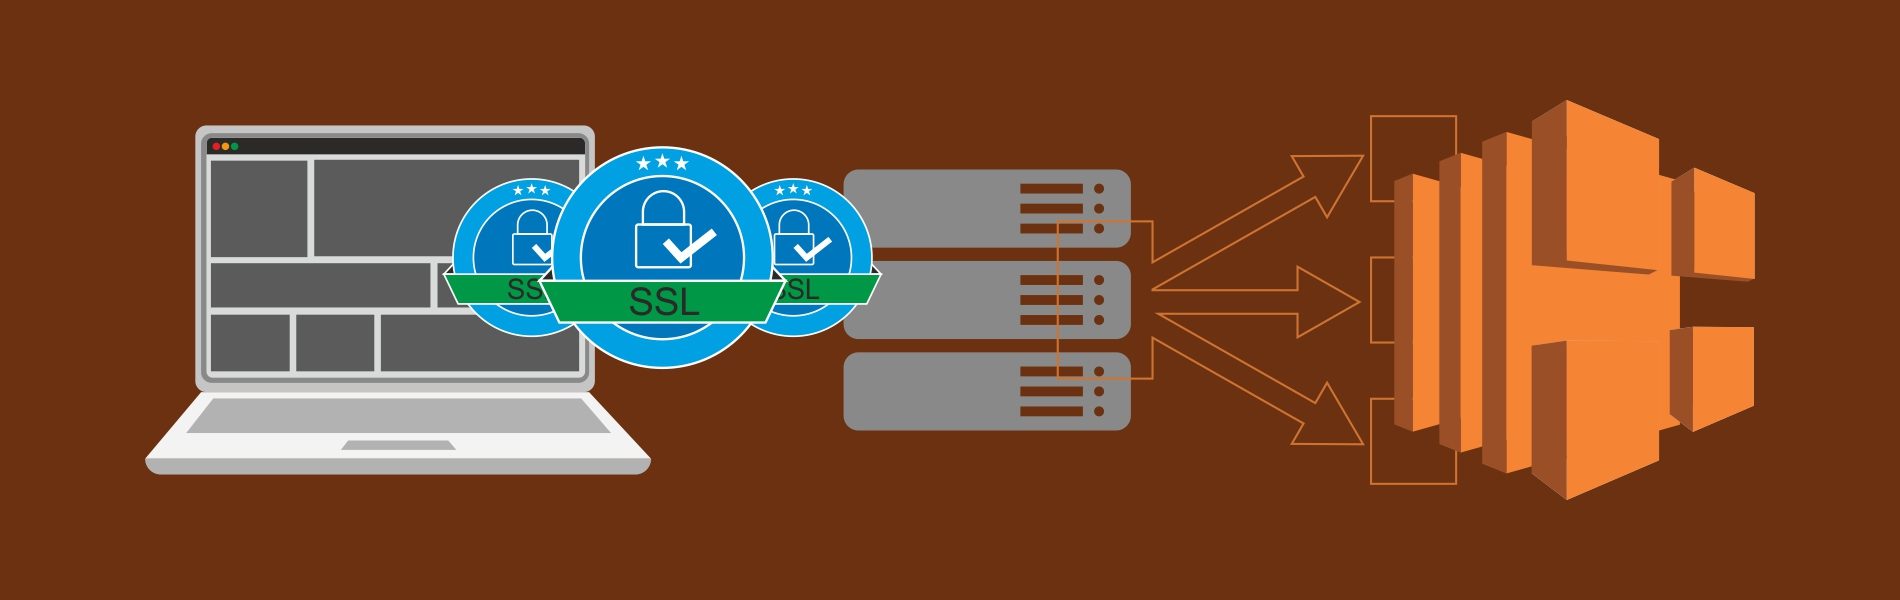 Blog-Header-Adding-multiple-SSL-certificates-on-single-AWS-Elastic-Load-Balancer-ELB